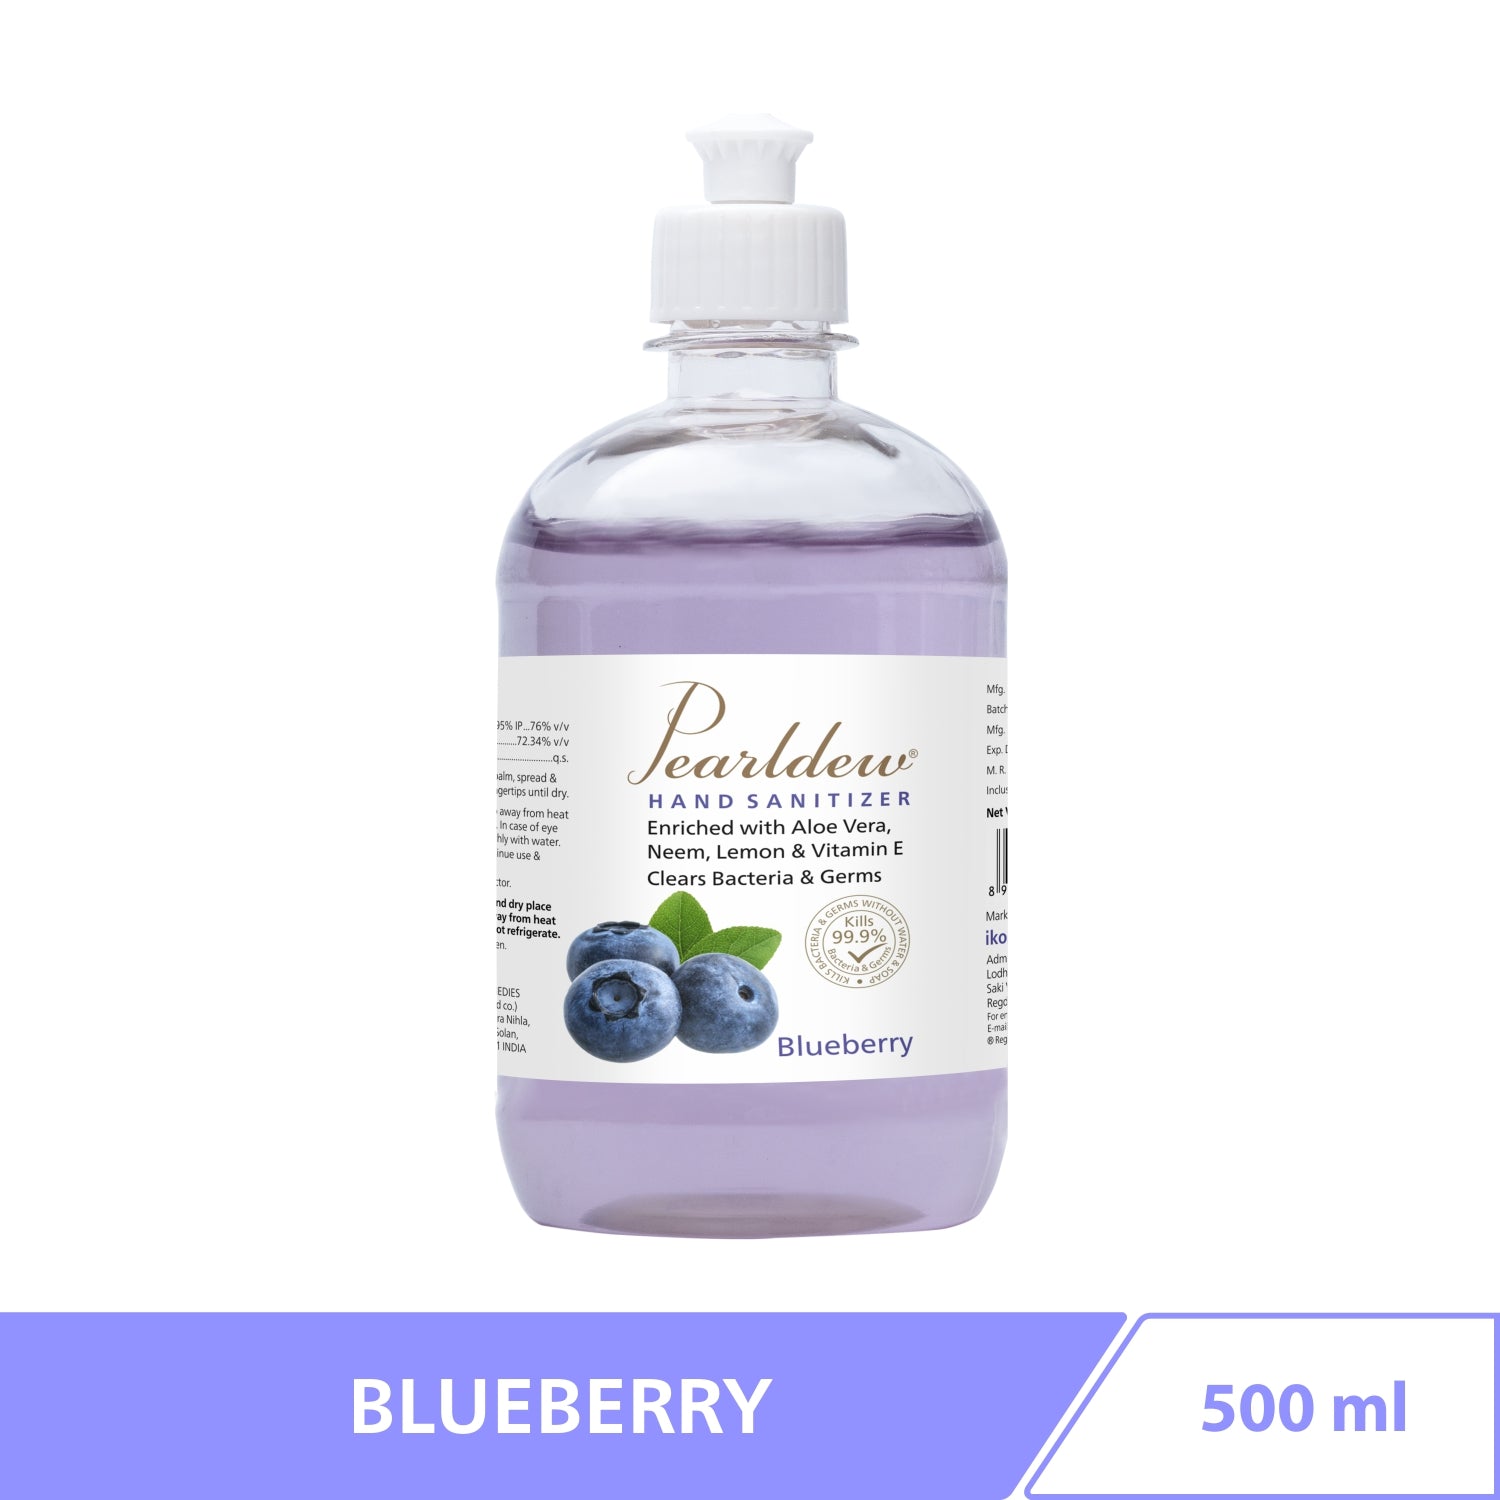 Pearldew Hand Sanitizer Gel (Blueberry) 500 ml